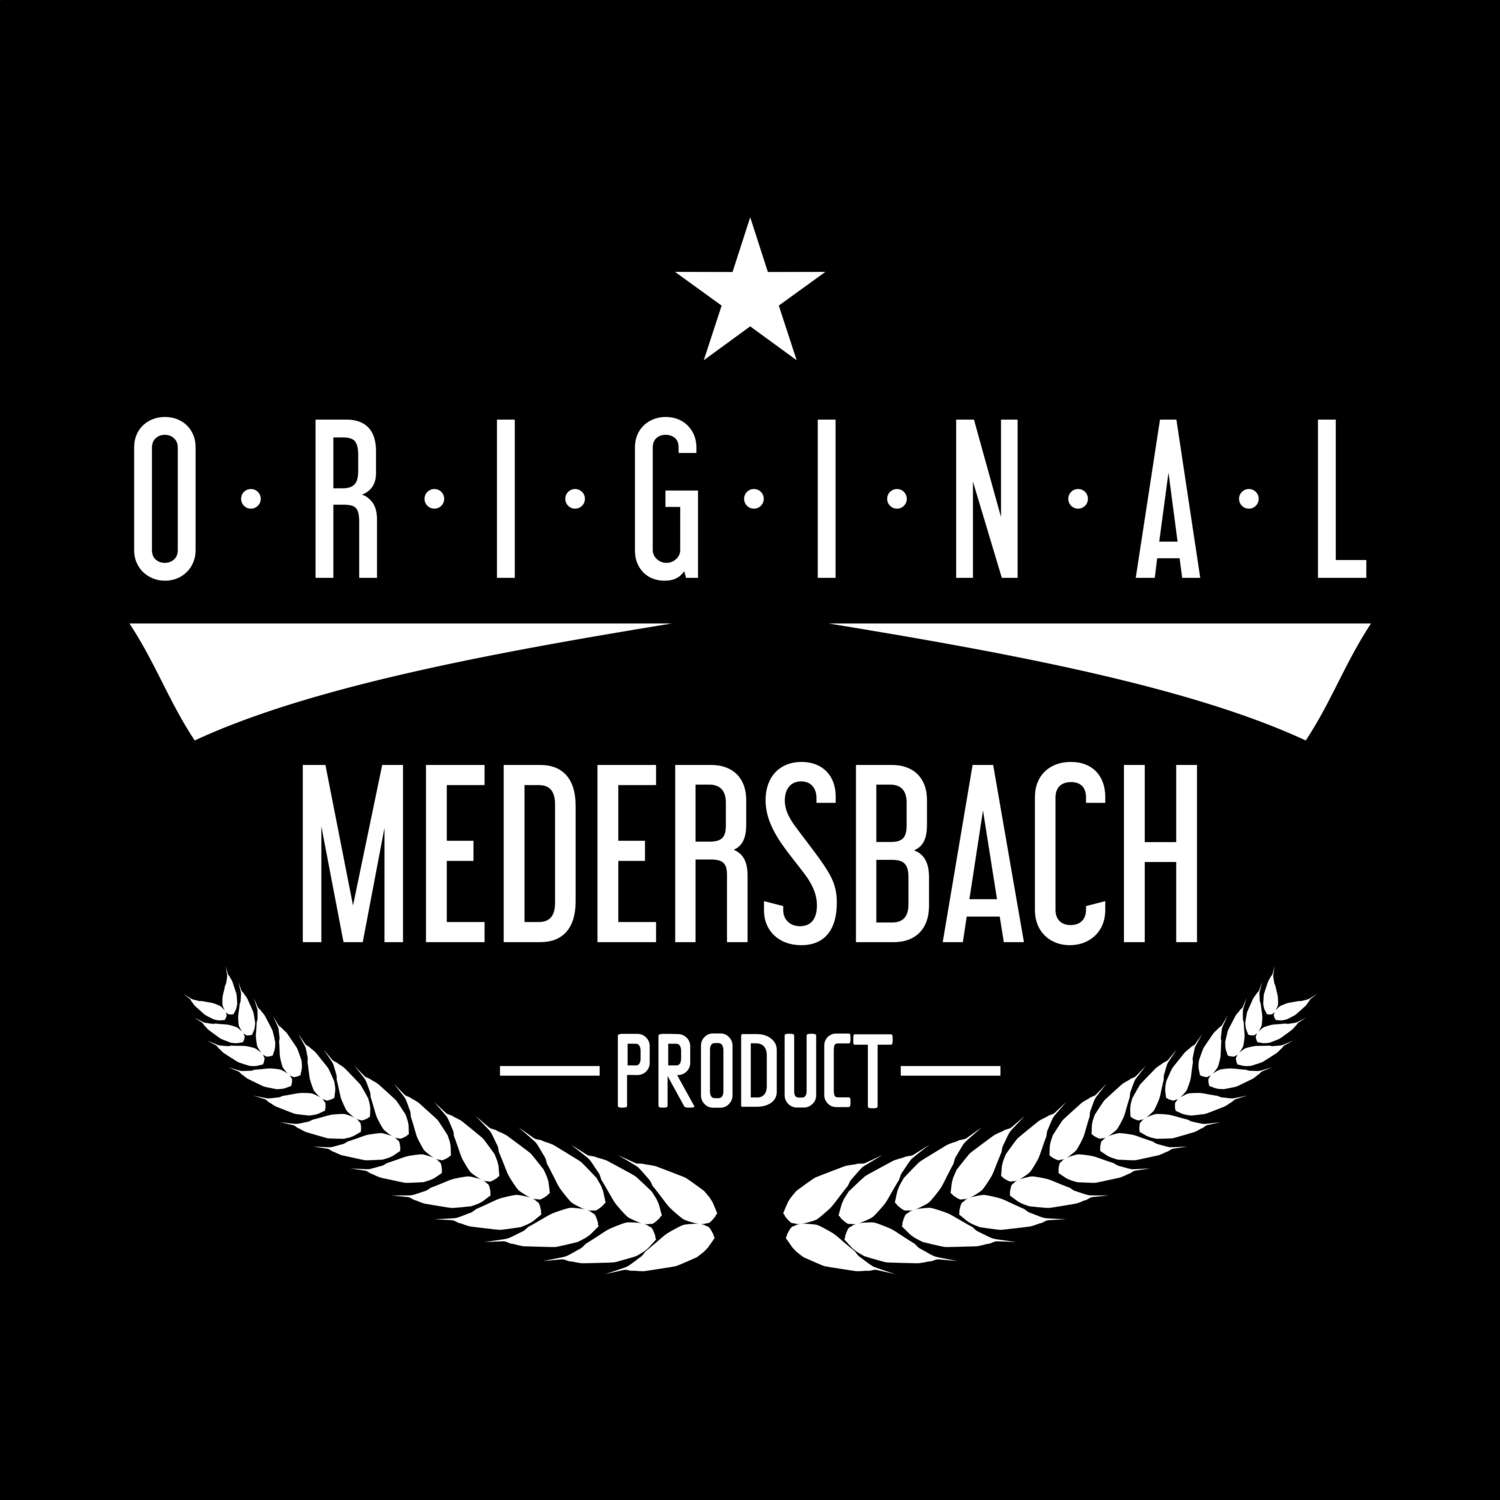 Medersbach T-Shirt »Original Product«